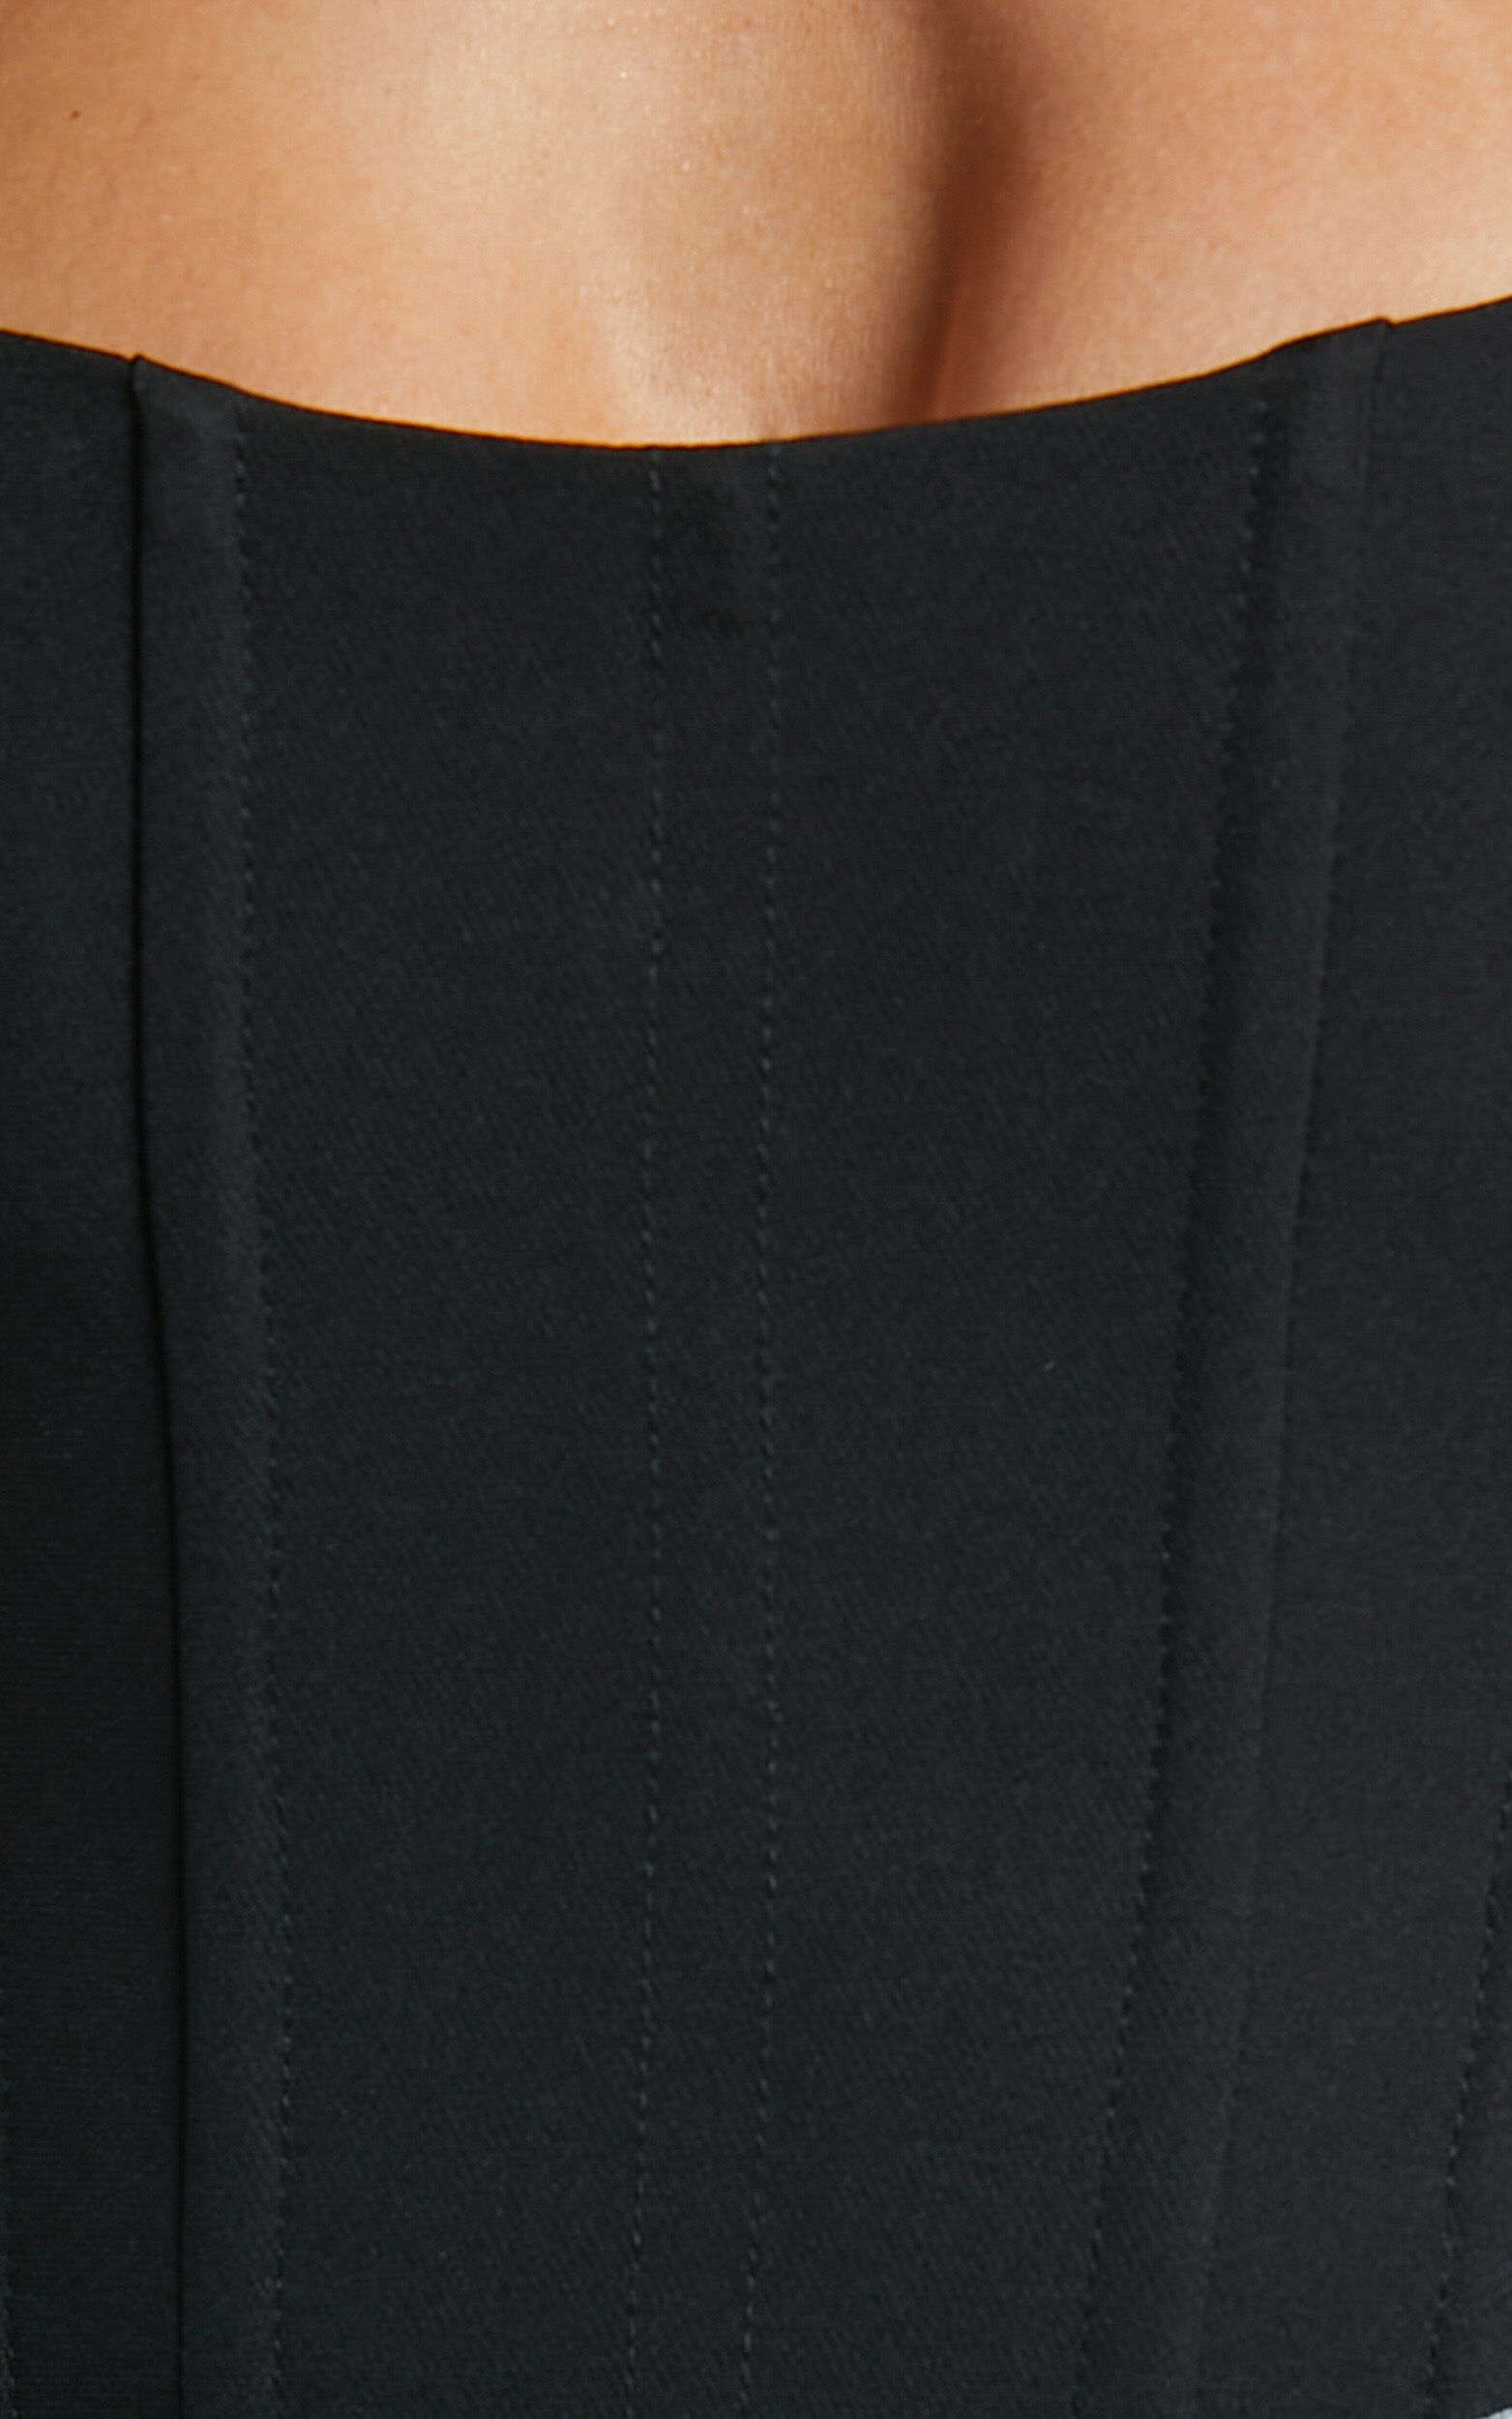 Katirina Top - Strapless Corset Bustier Top in Black | Showpo USA